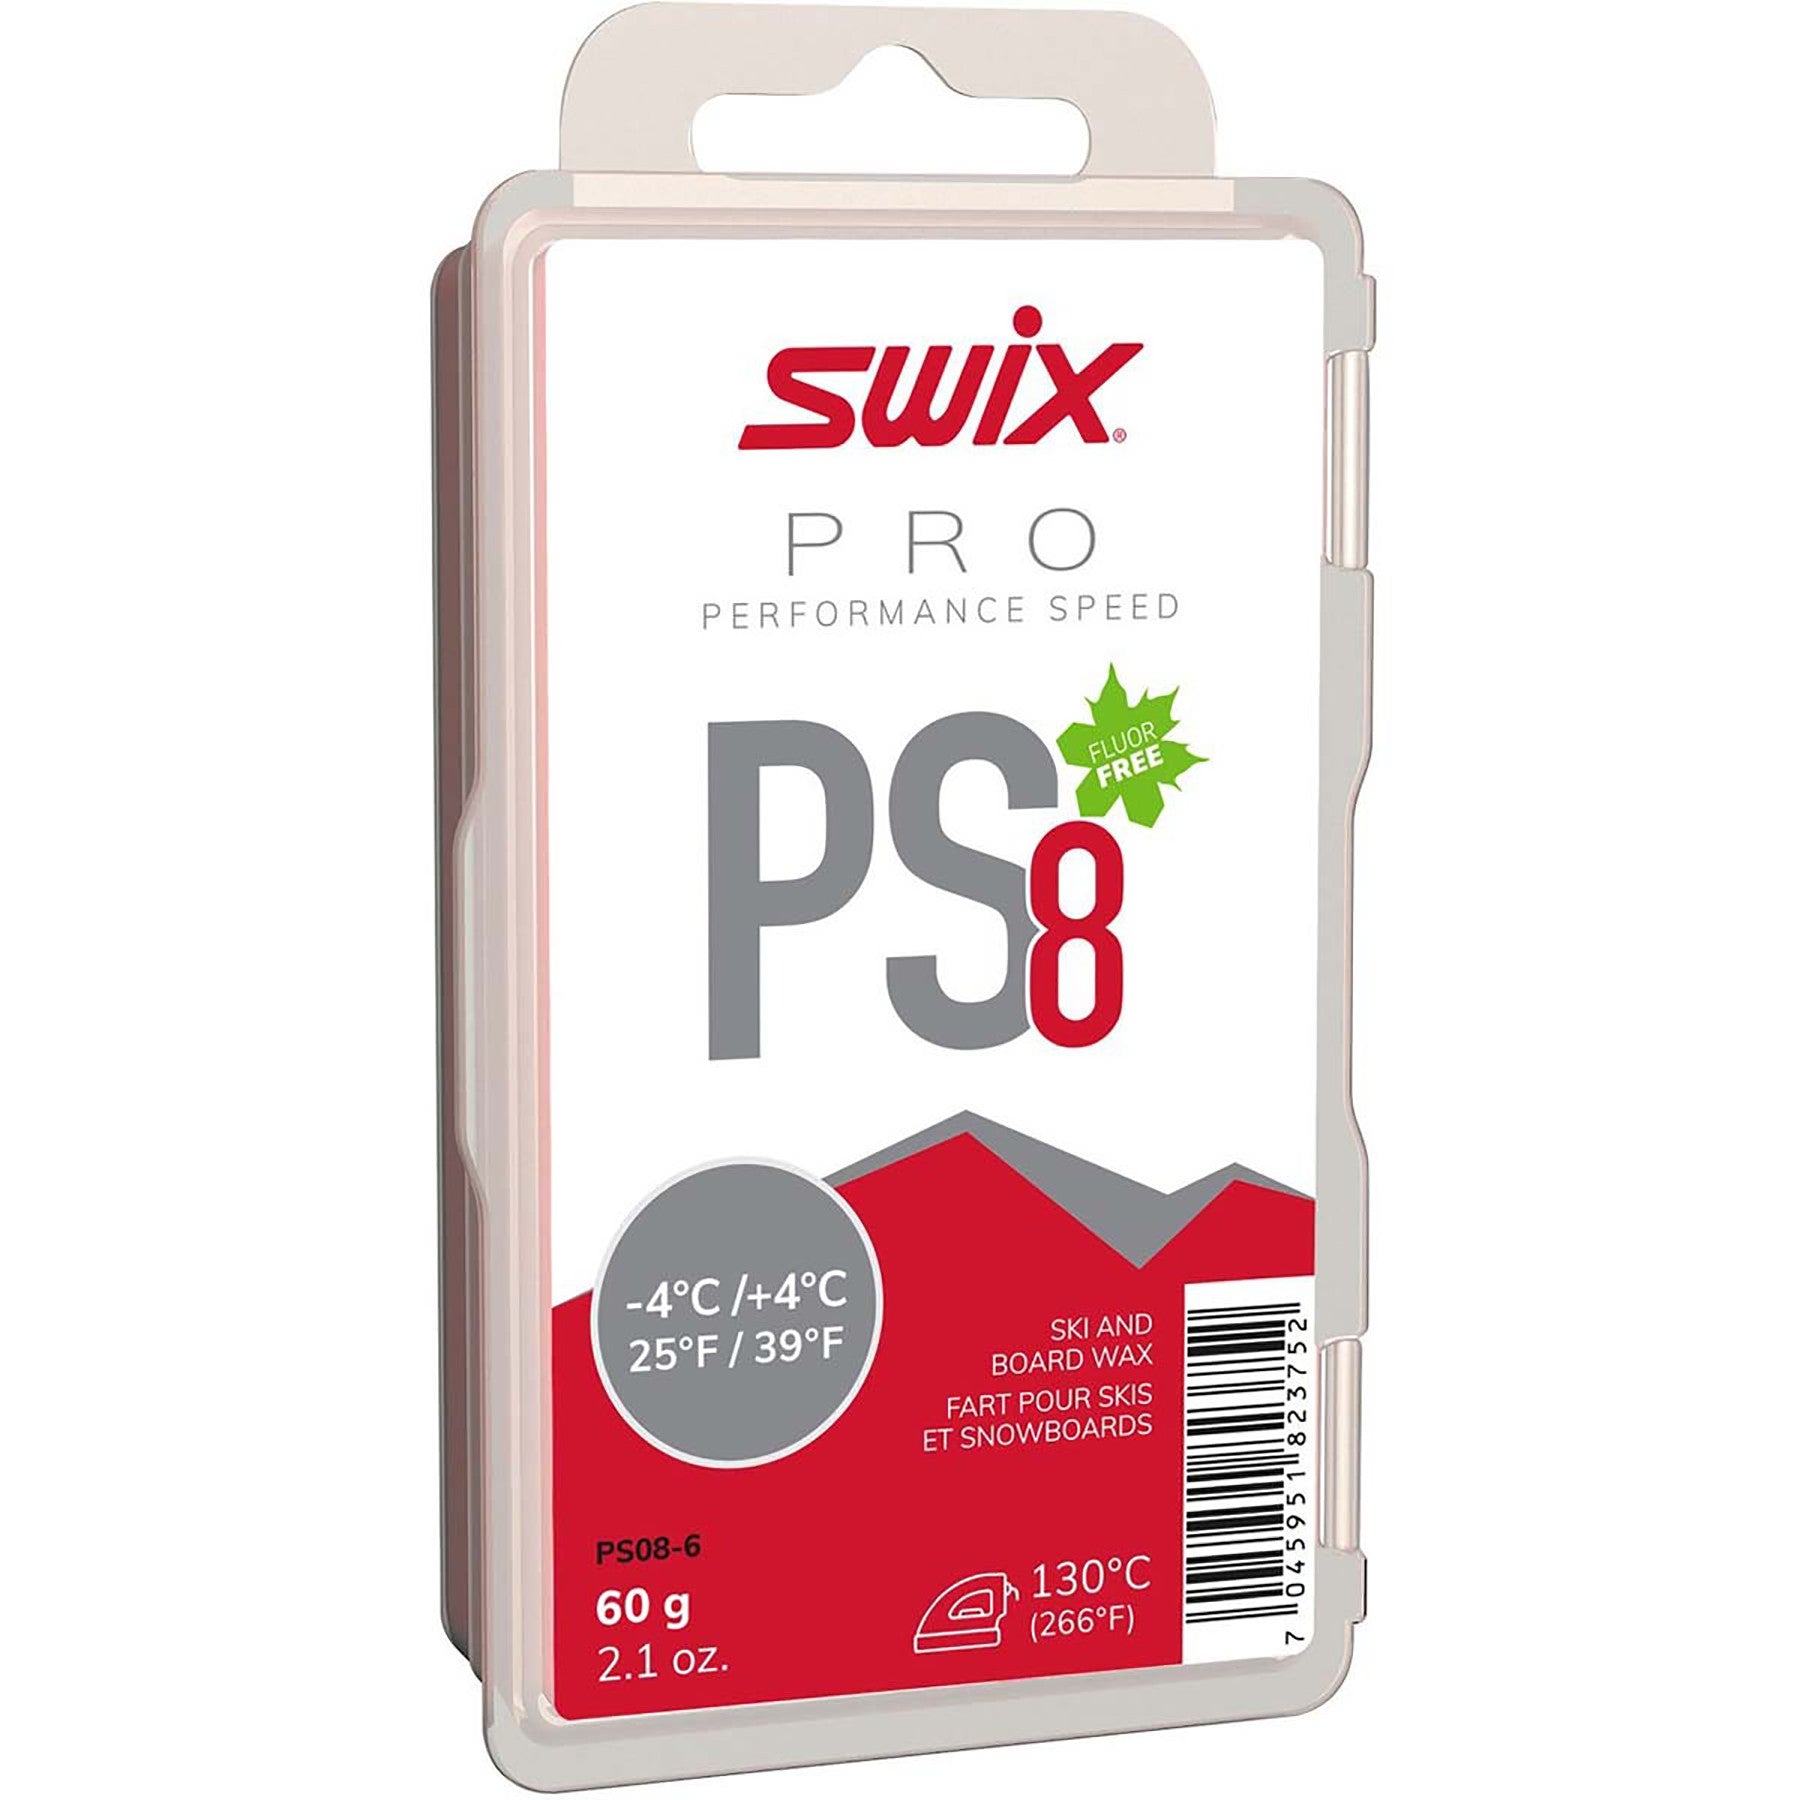 Swix PS Performance Speed Glide Wax 60g